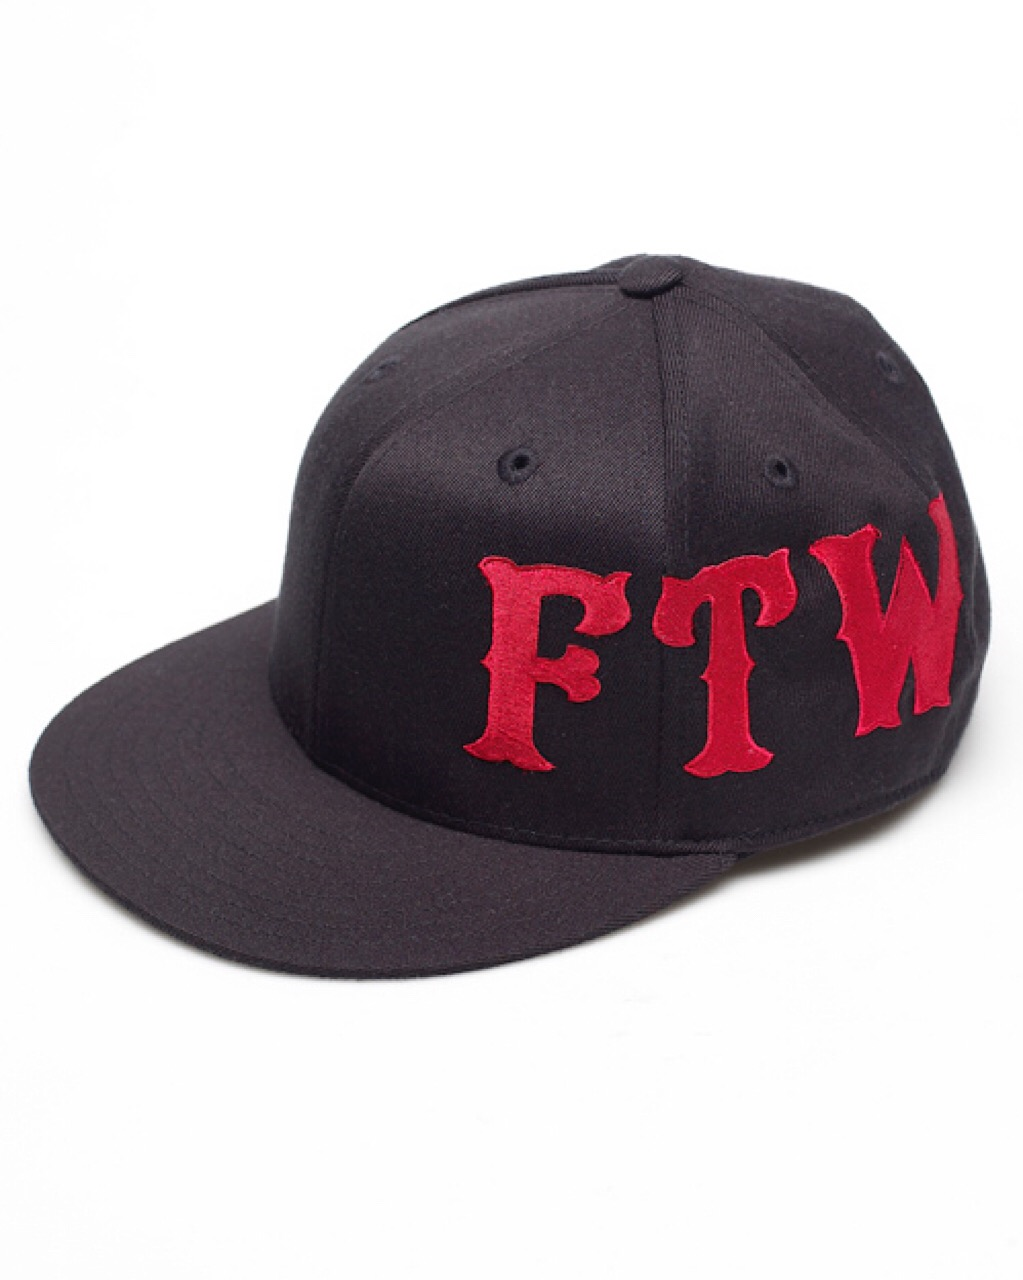 Large FTW Flat Bill Hat - 415 Clothing,